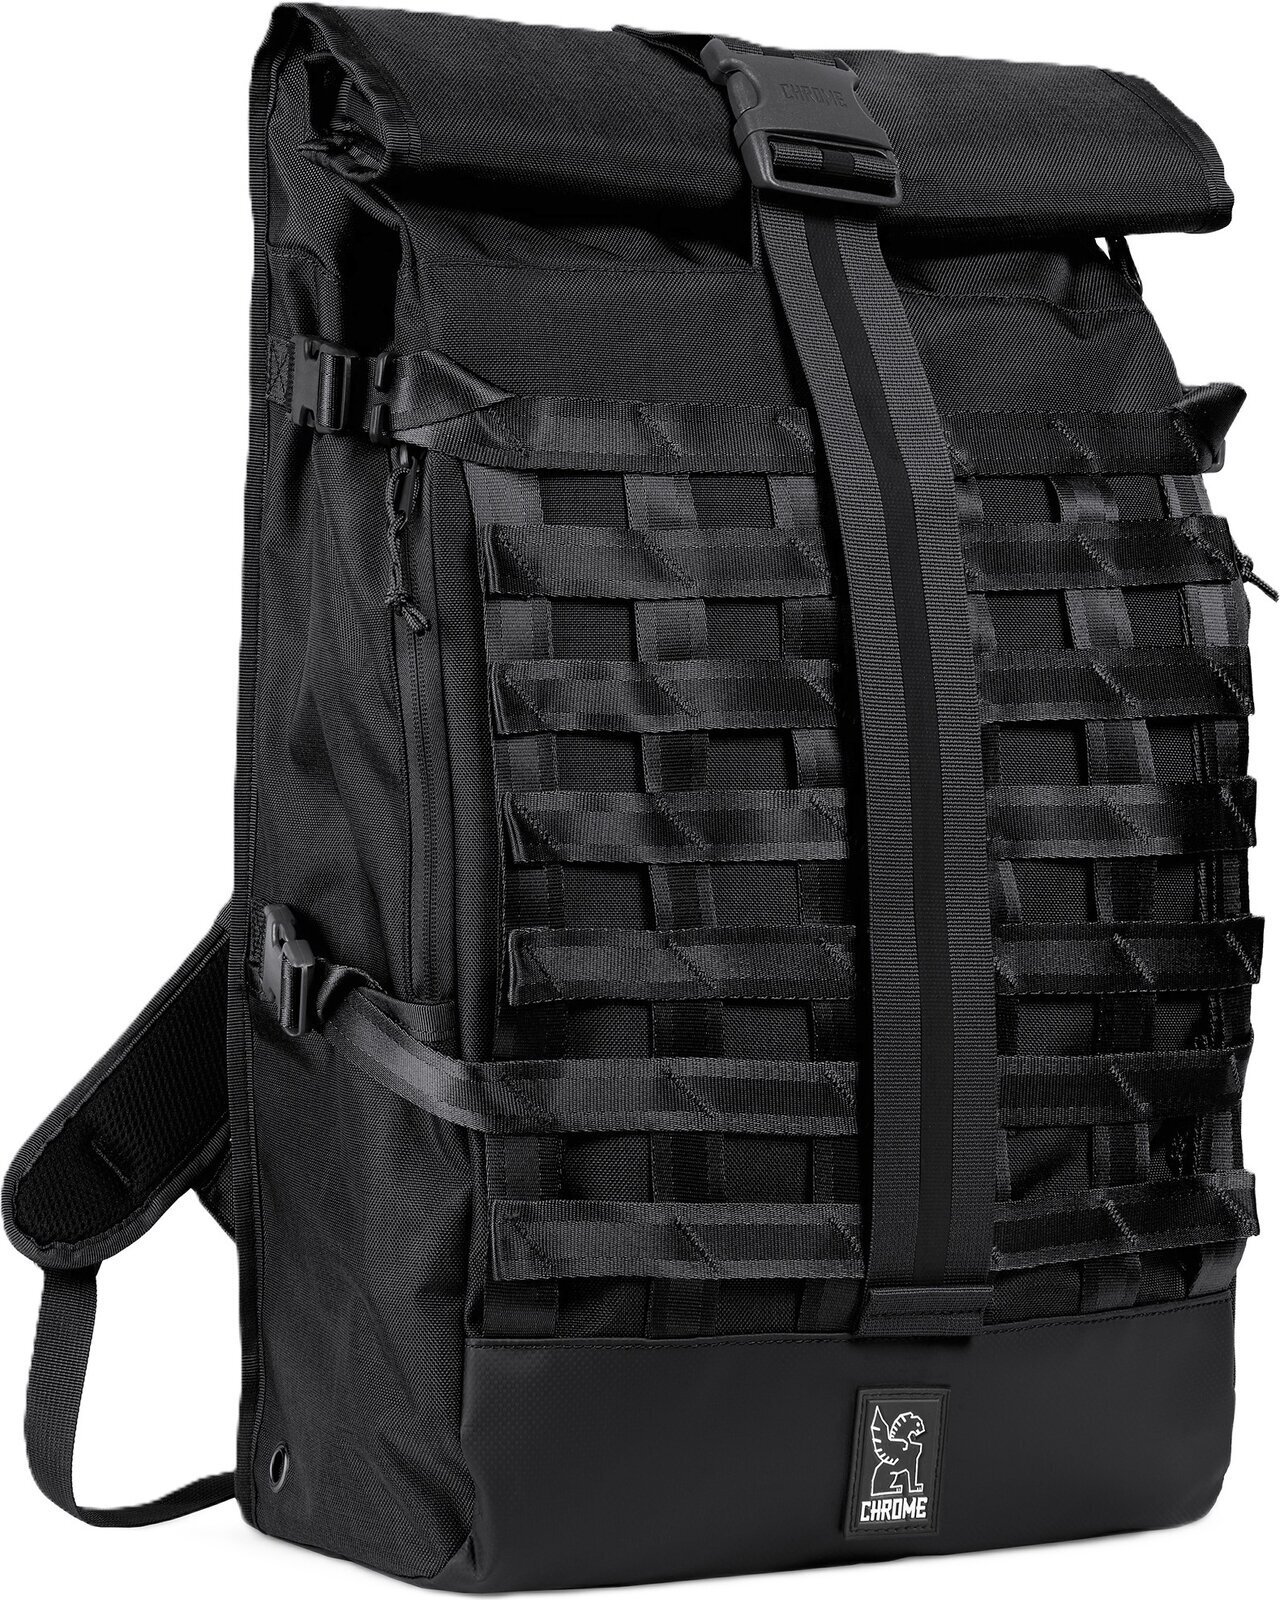 Lifestyle-rugzak / tas Chrome Barrage Backpack Black 34 L Rugzak